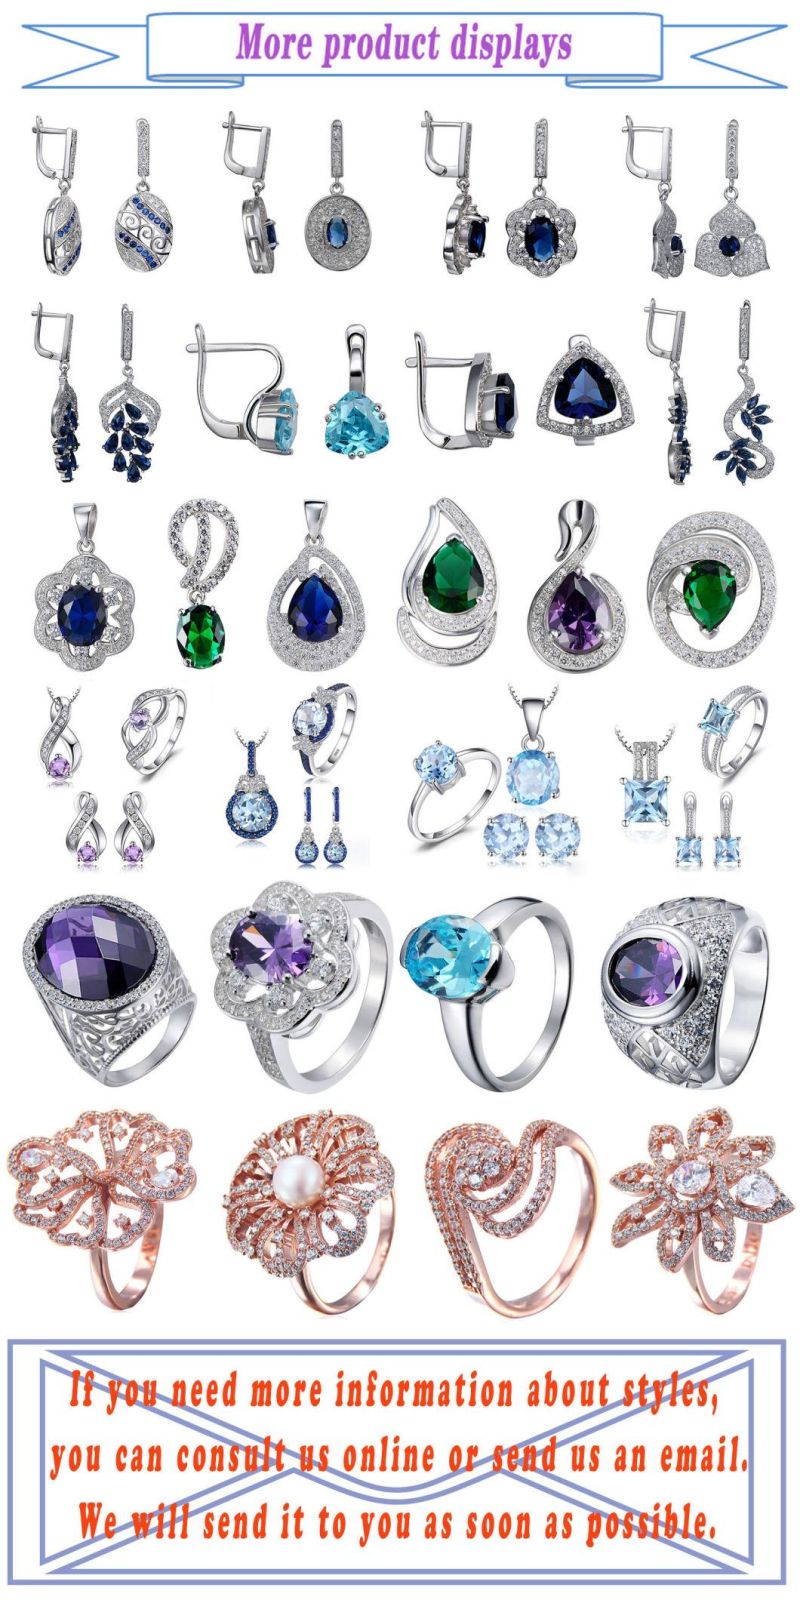 Created Emerald Halo Stud Earrings Solid 925 Sterling Silver Earring Fine Jewelry